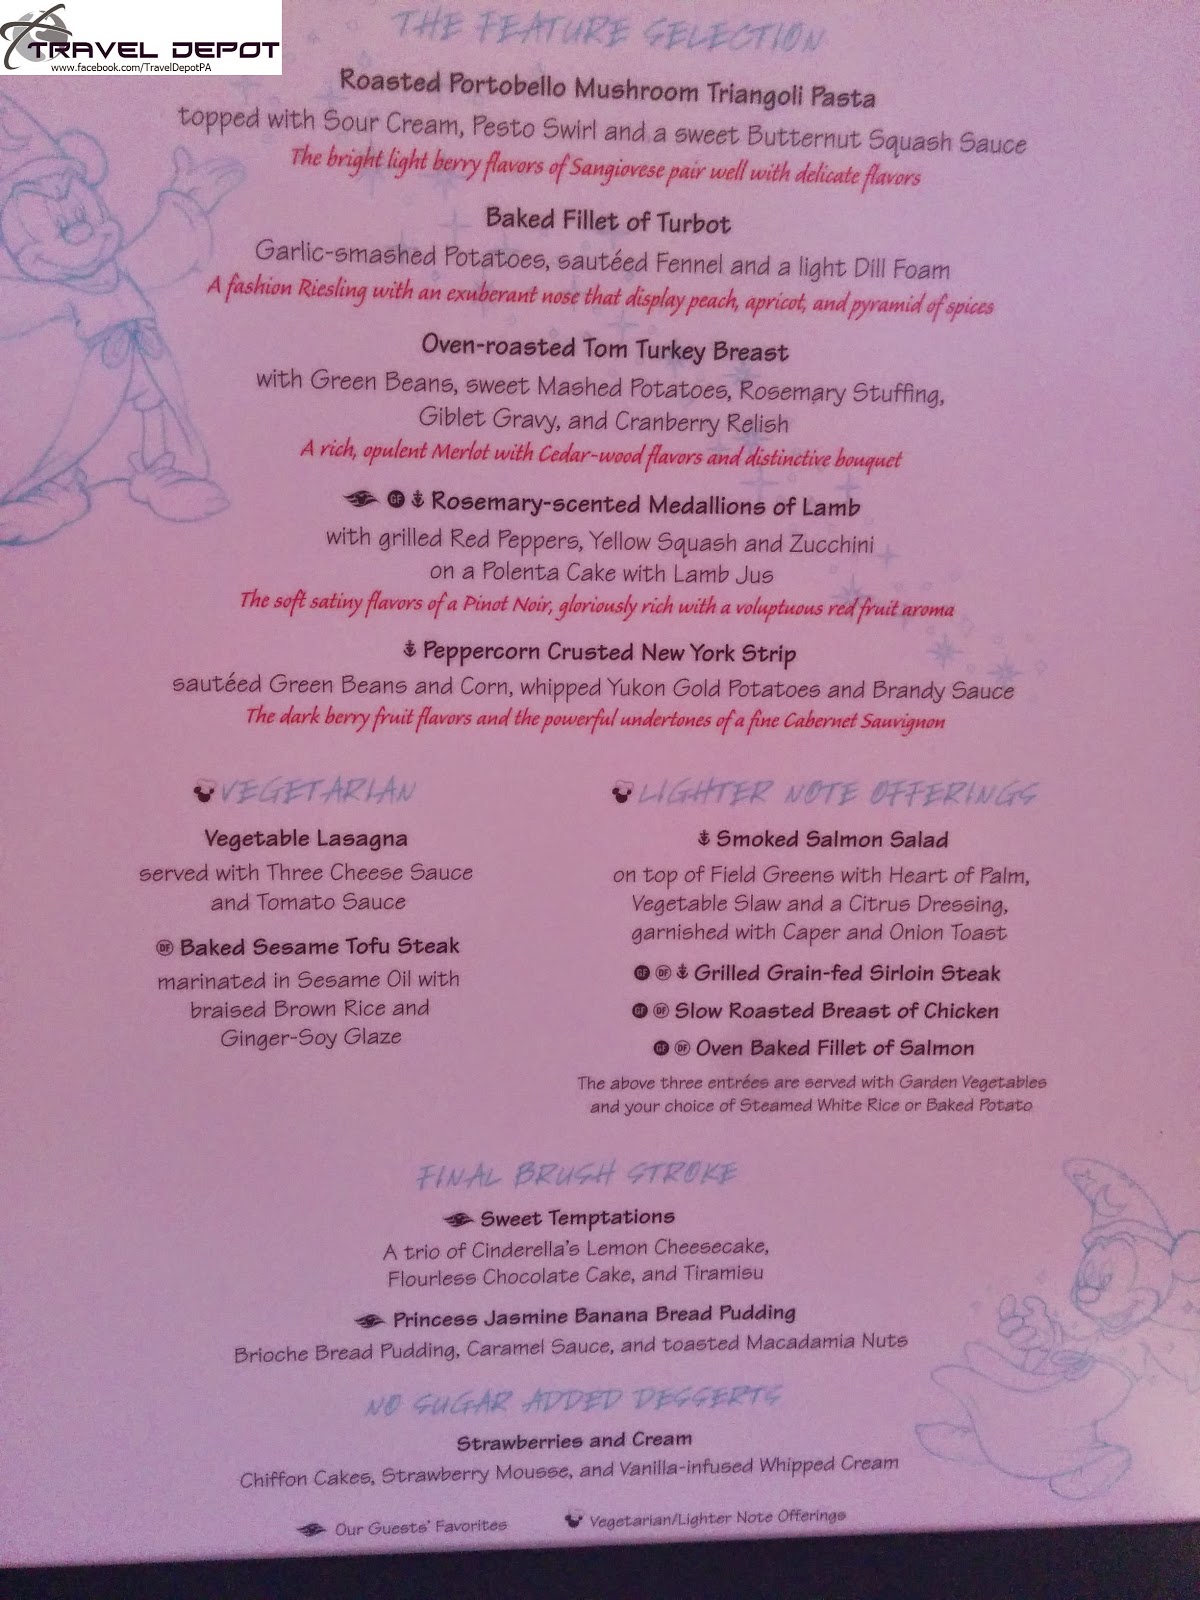 Main Dining Room menus aboard the Disney Magic Cruise Ship Travel Depot